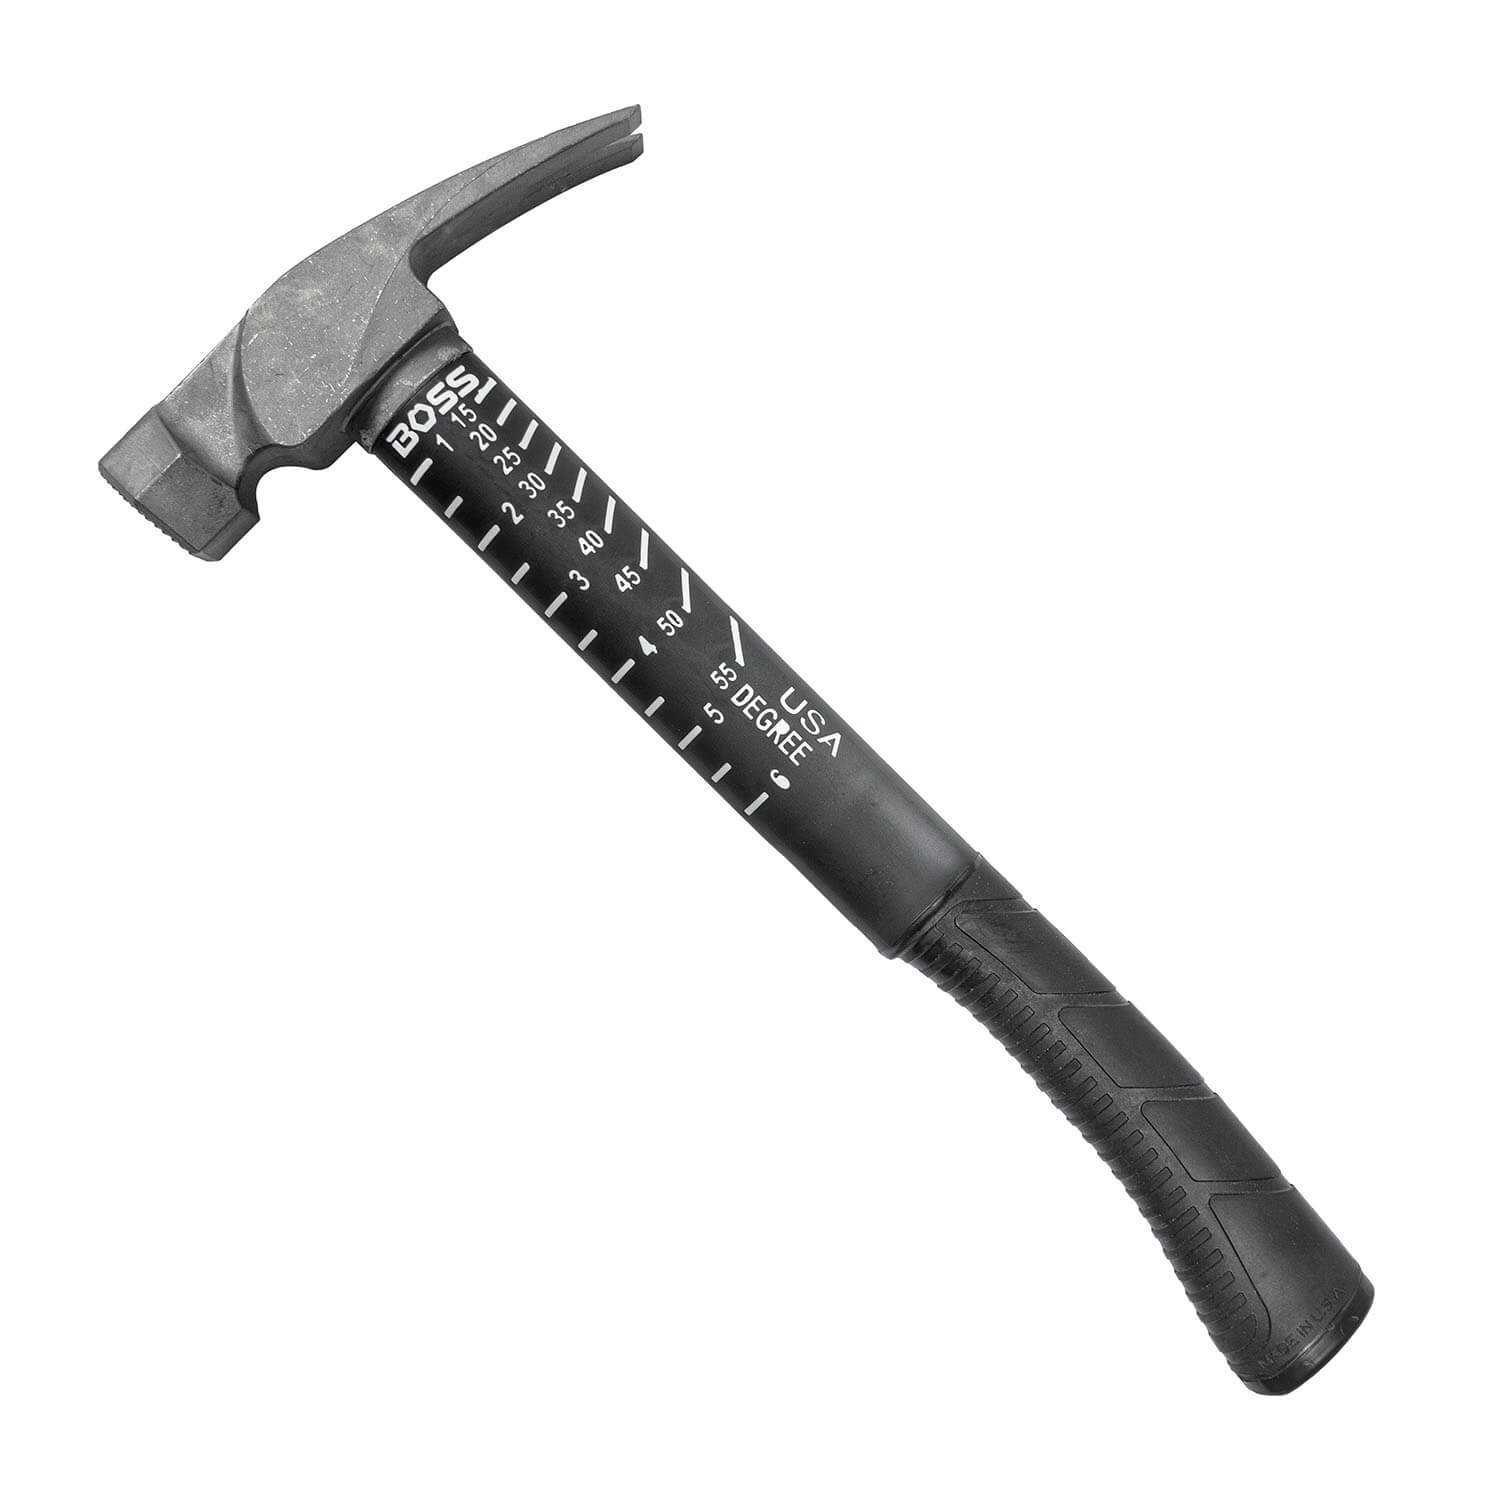 K Tool International 71770 6 Piece Hammer Set for Garages, Repair Shops,  and DIY, Carbon-steel Forged, Heat Treated, Fiberglass Handle, TPR Grip